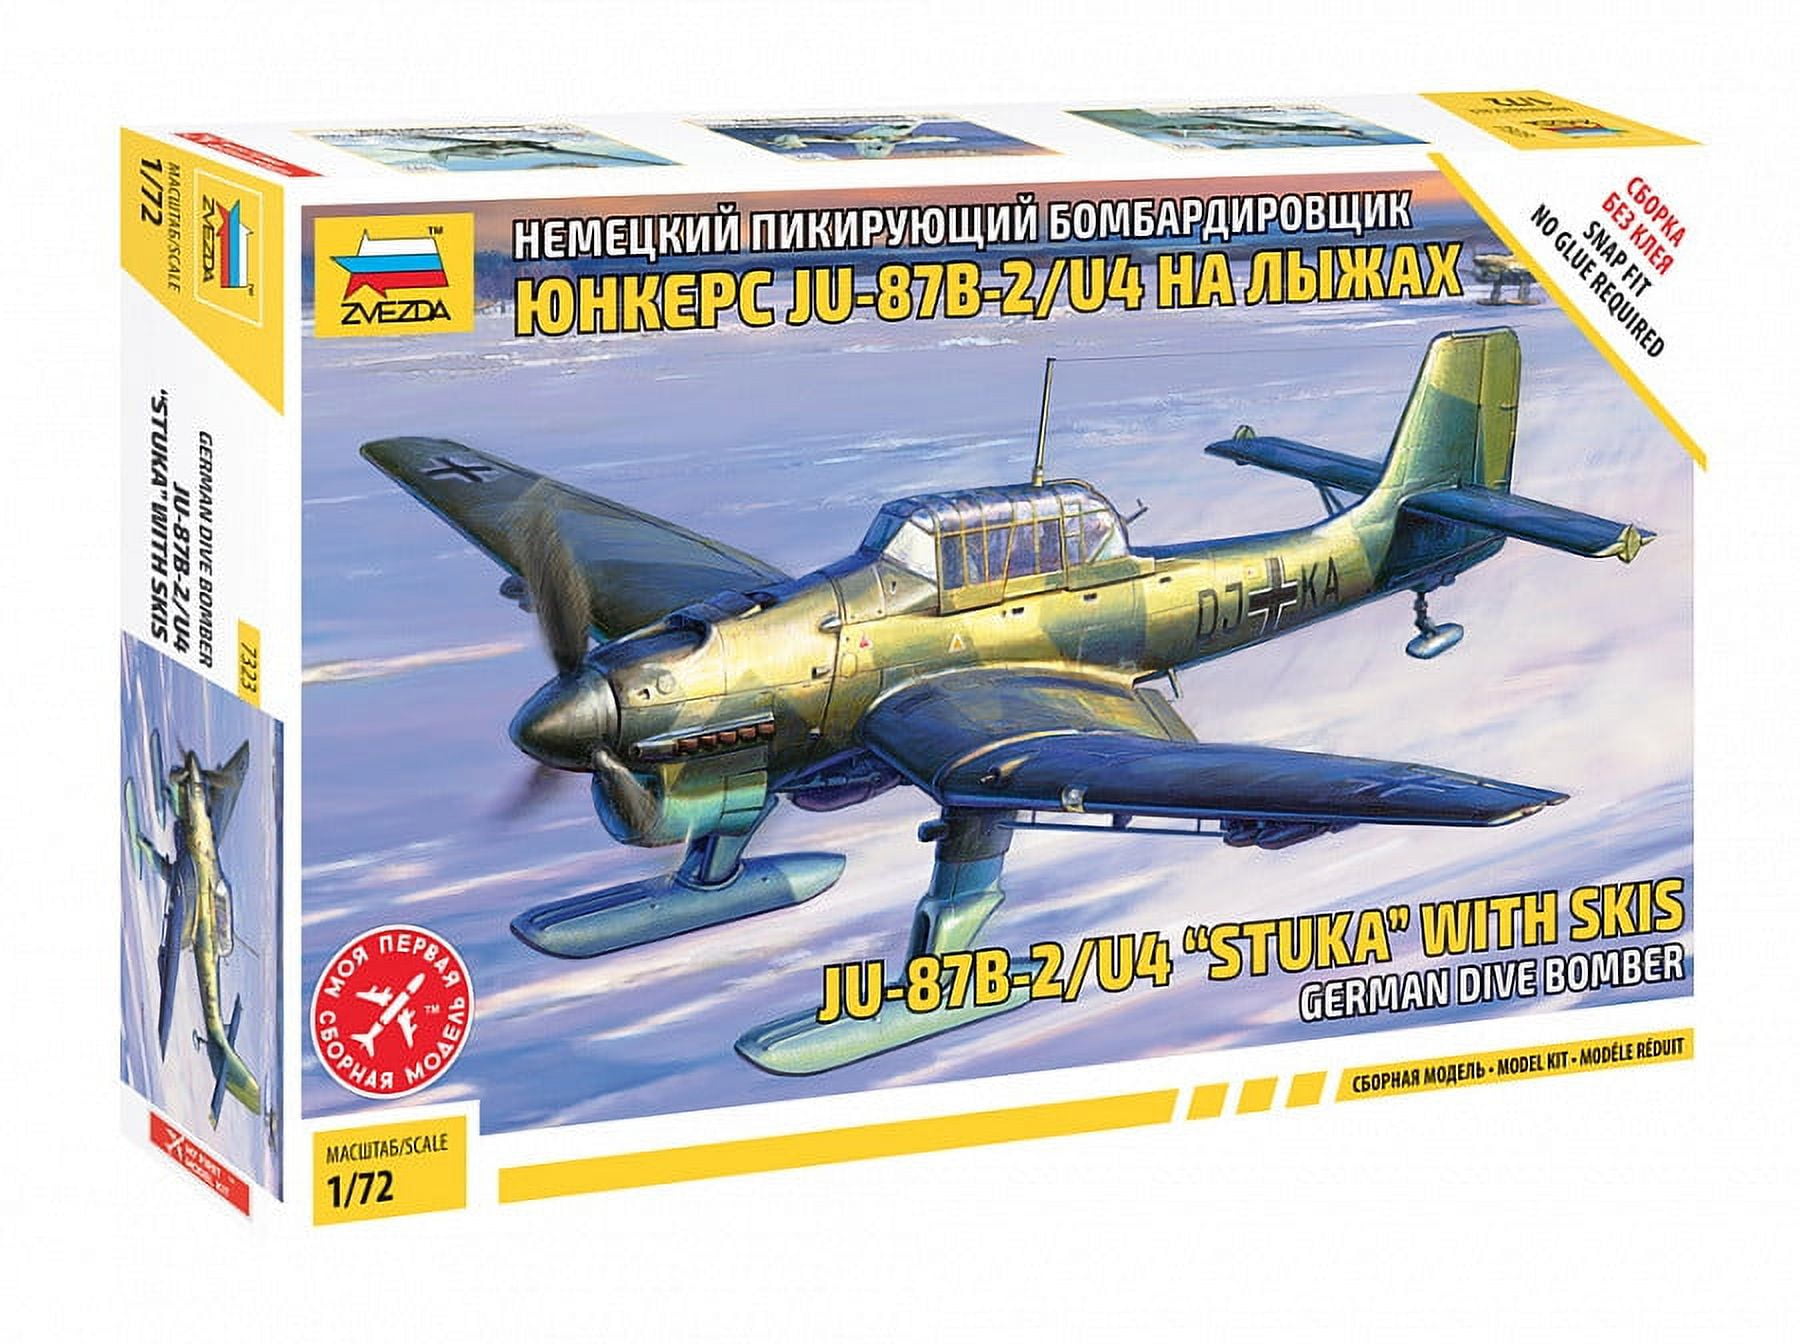 Premium Hobbies Junkers JU-87G-2 Stuka 1:72 Plastic Model Airplane Kit  133V : b09rhnw87q : B&ICストア - 通販 - Yahoo!ショッピング